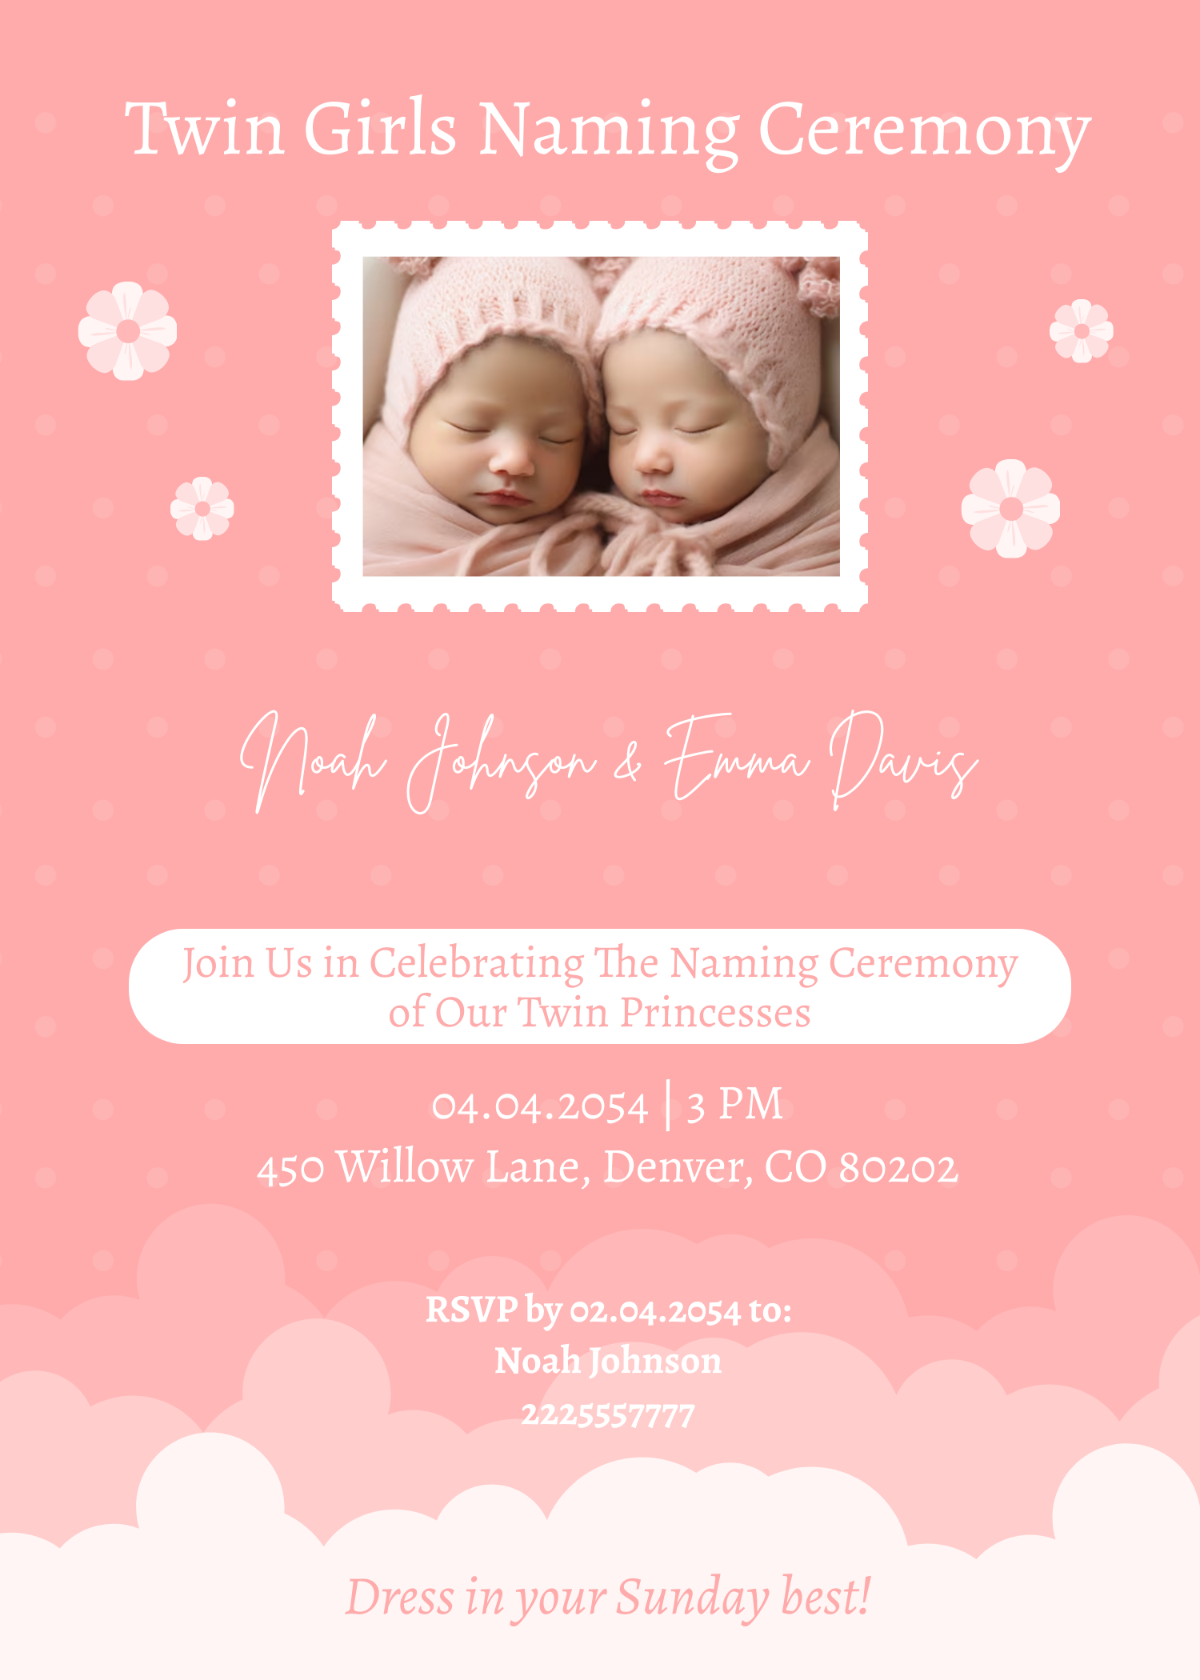 Twin Girls Naming Ceremony Invitation